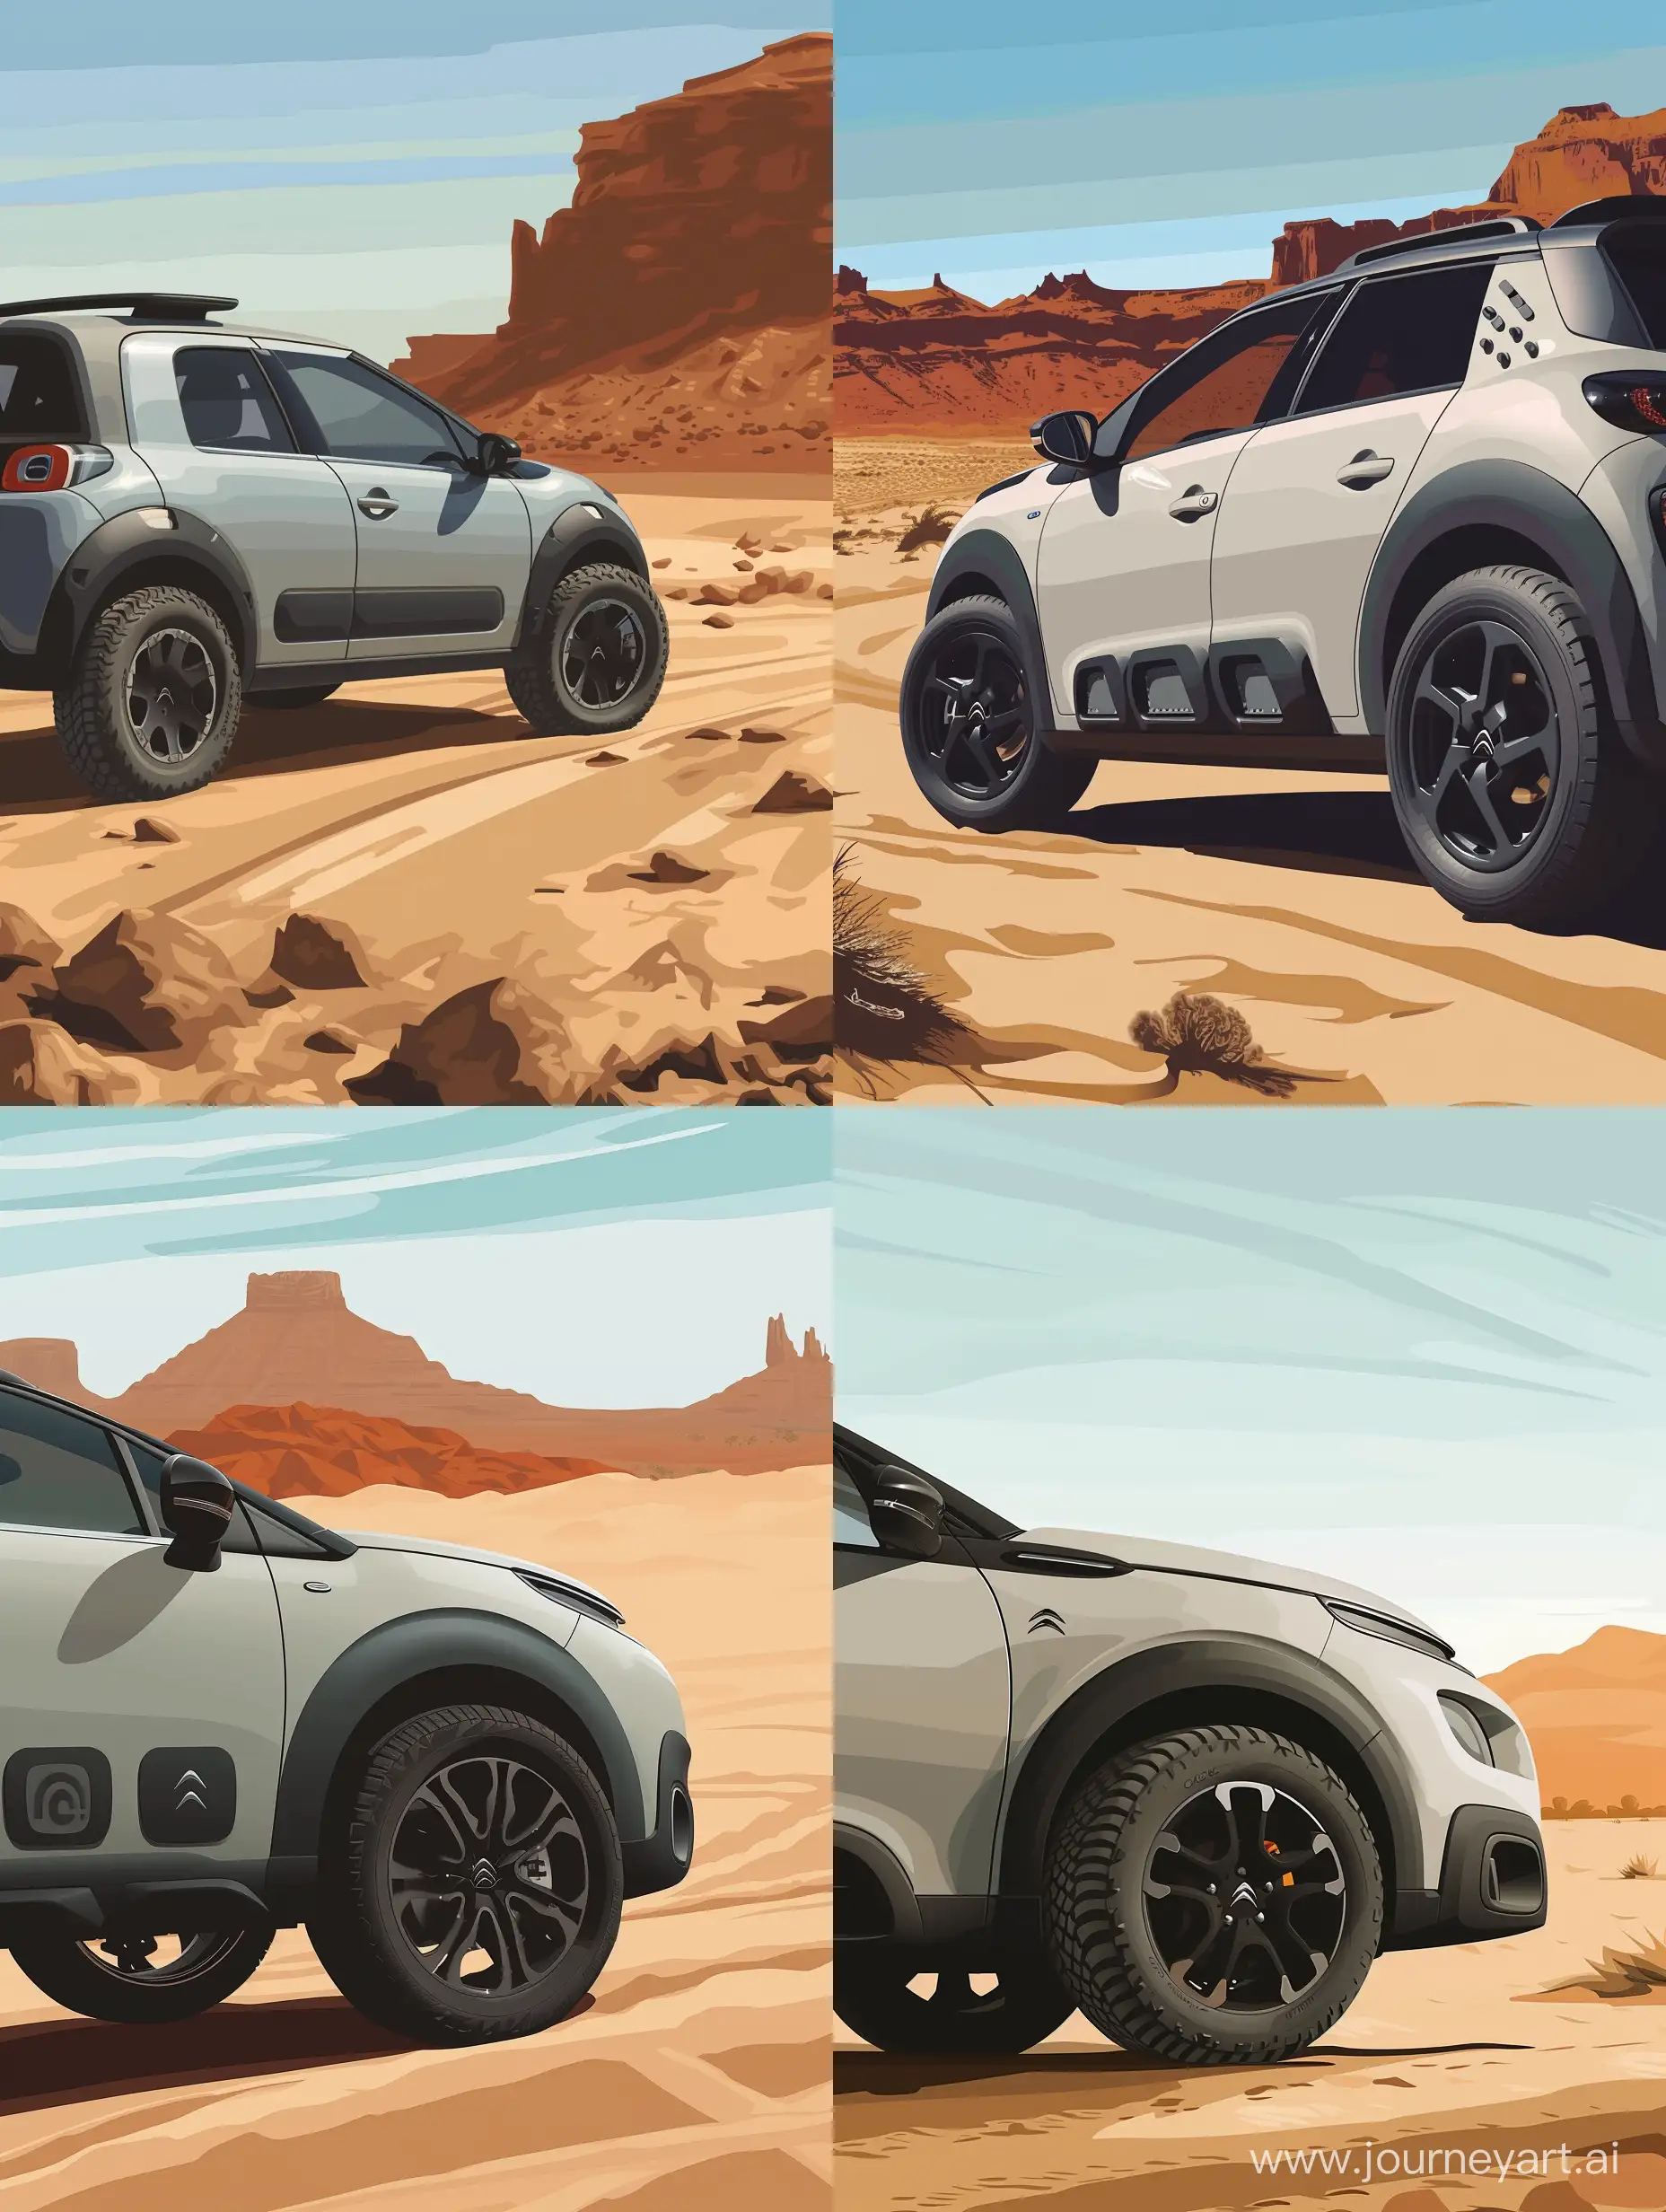 Silver gray 2015 model Citroen C4 Cactus vehicle with black rims, in the desert, illustration wallpaper